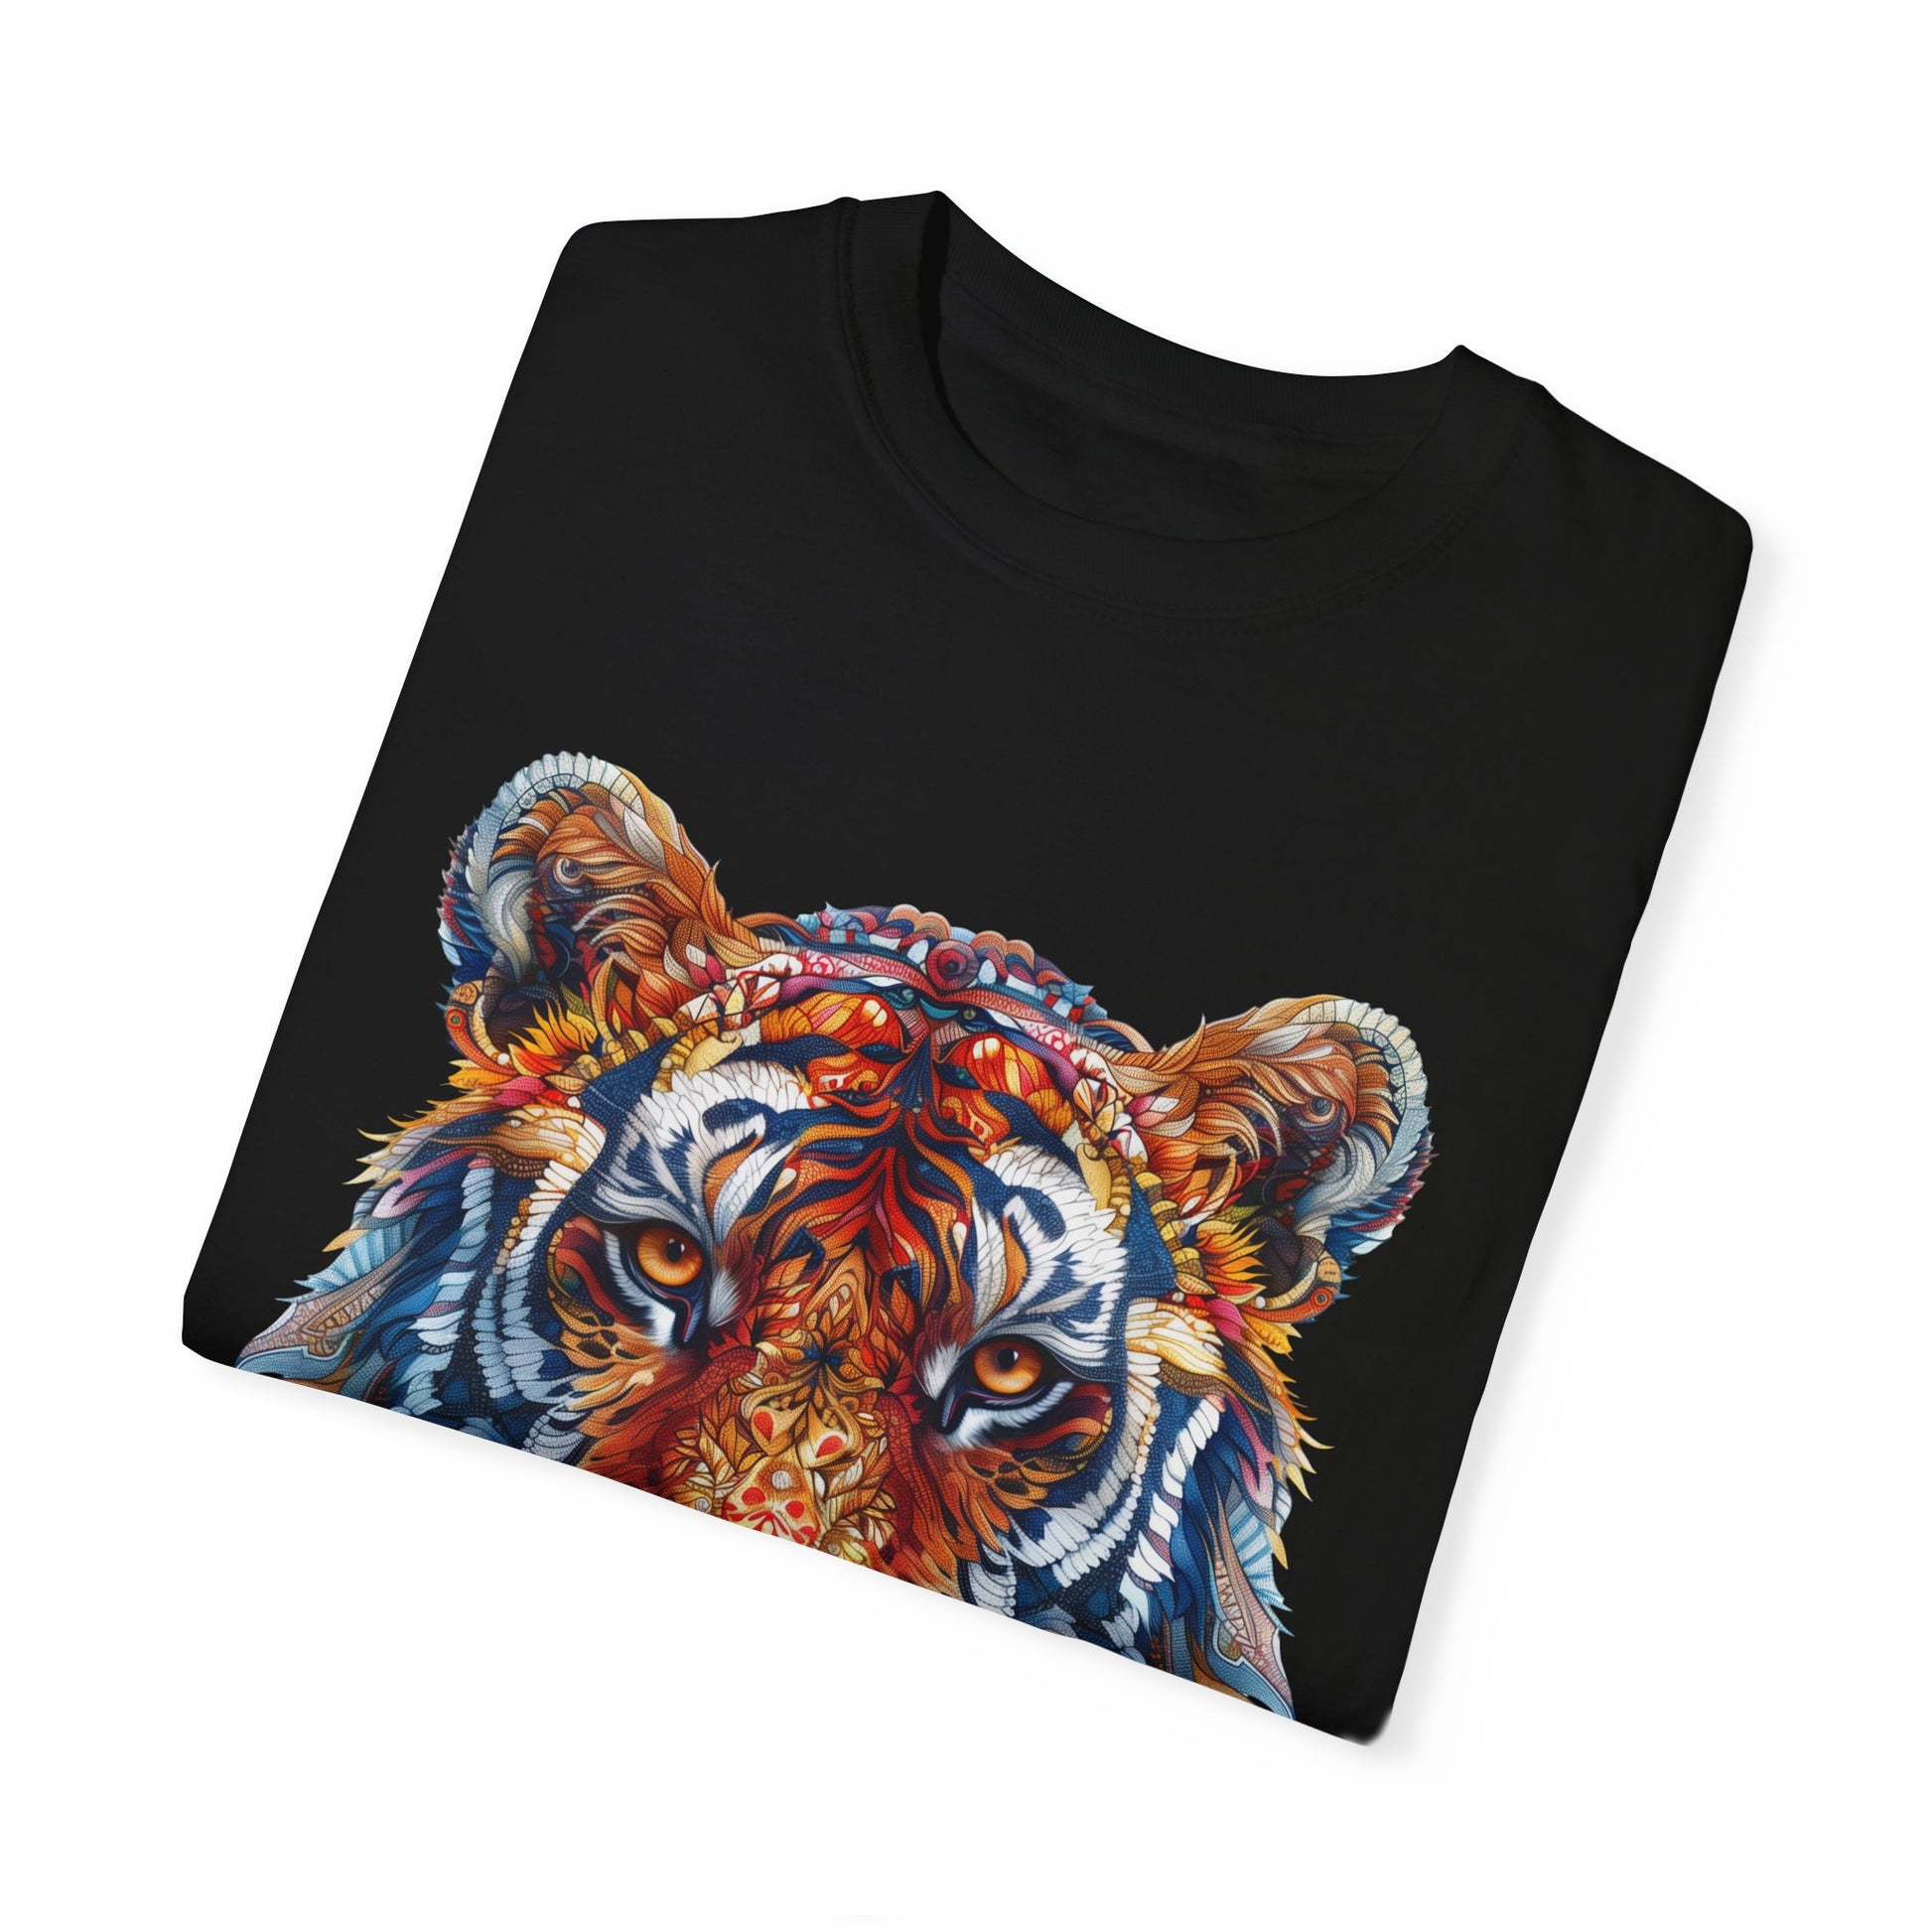 Lion Head Cool Graphic Design Novelty Unisex Garment-dyed T-shirt Cotton Funny Humorous Graphic Soft Premium Unisex Men Women Black T-shirt Birthday Gift-17